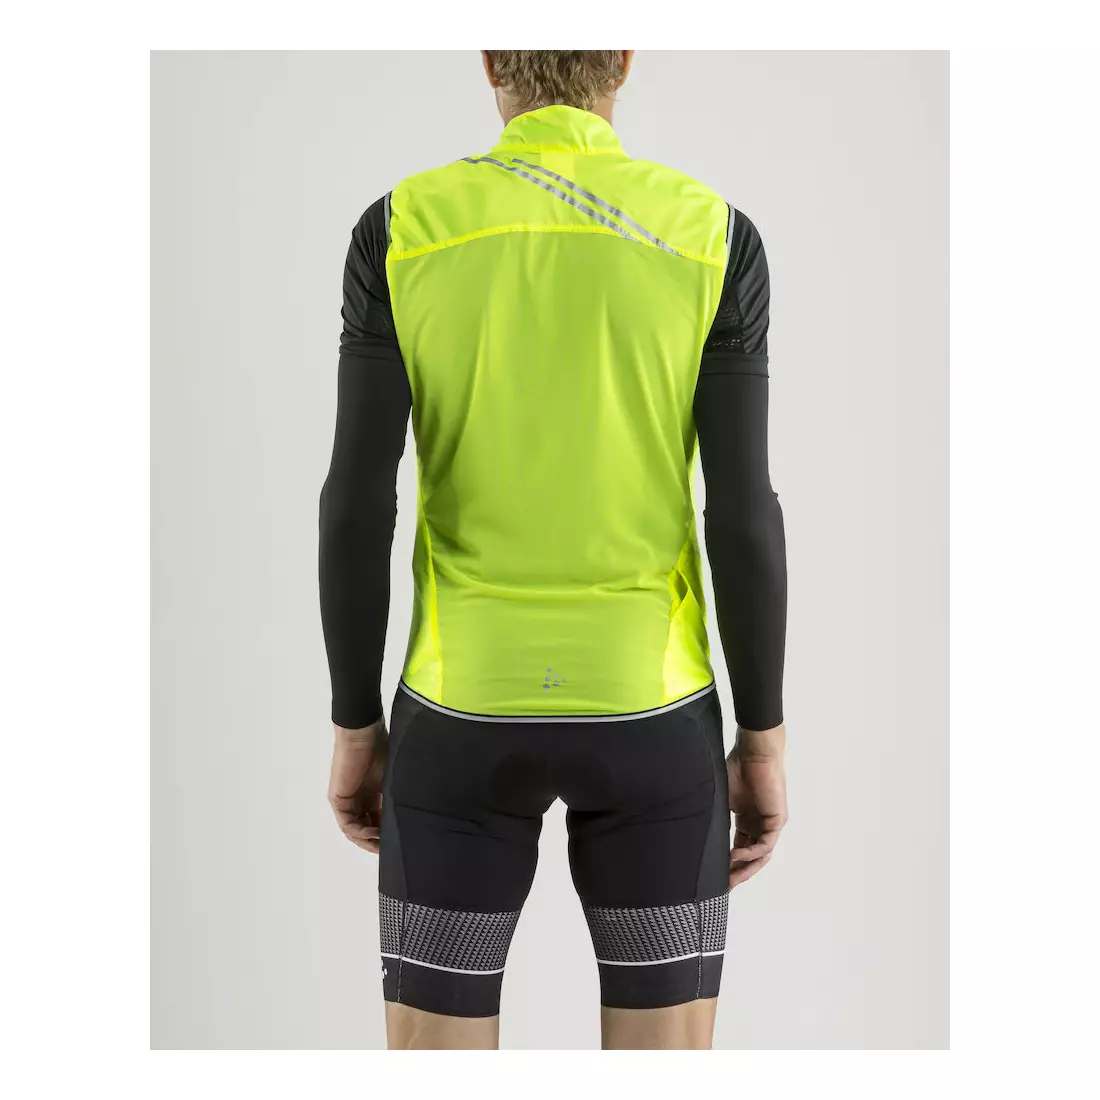 CRAFT LITHE ultralight cycling vest, fluorine 1906087-851999